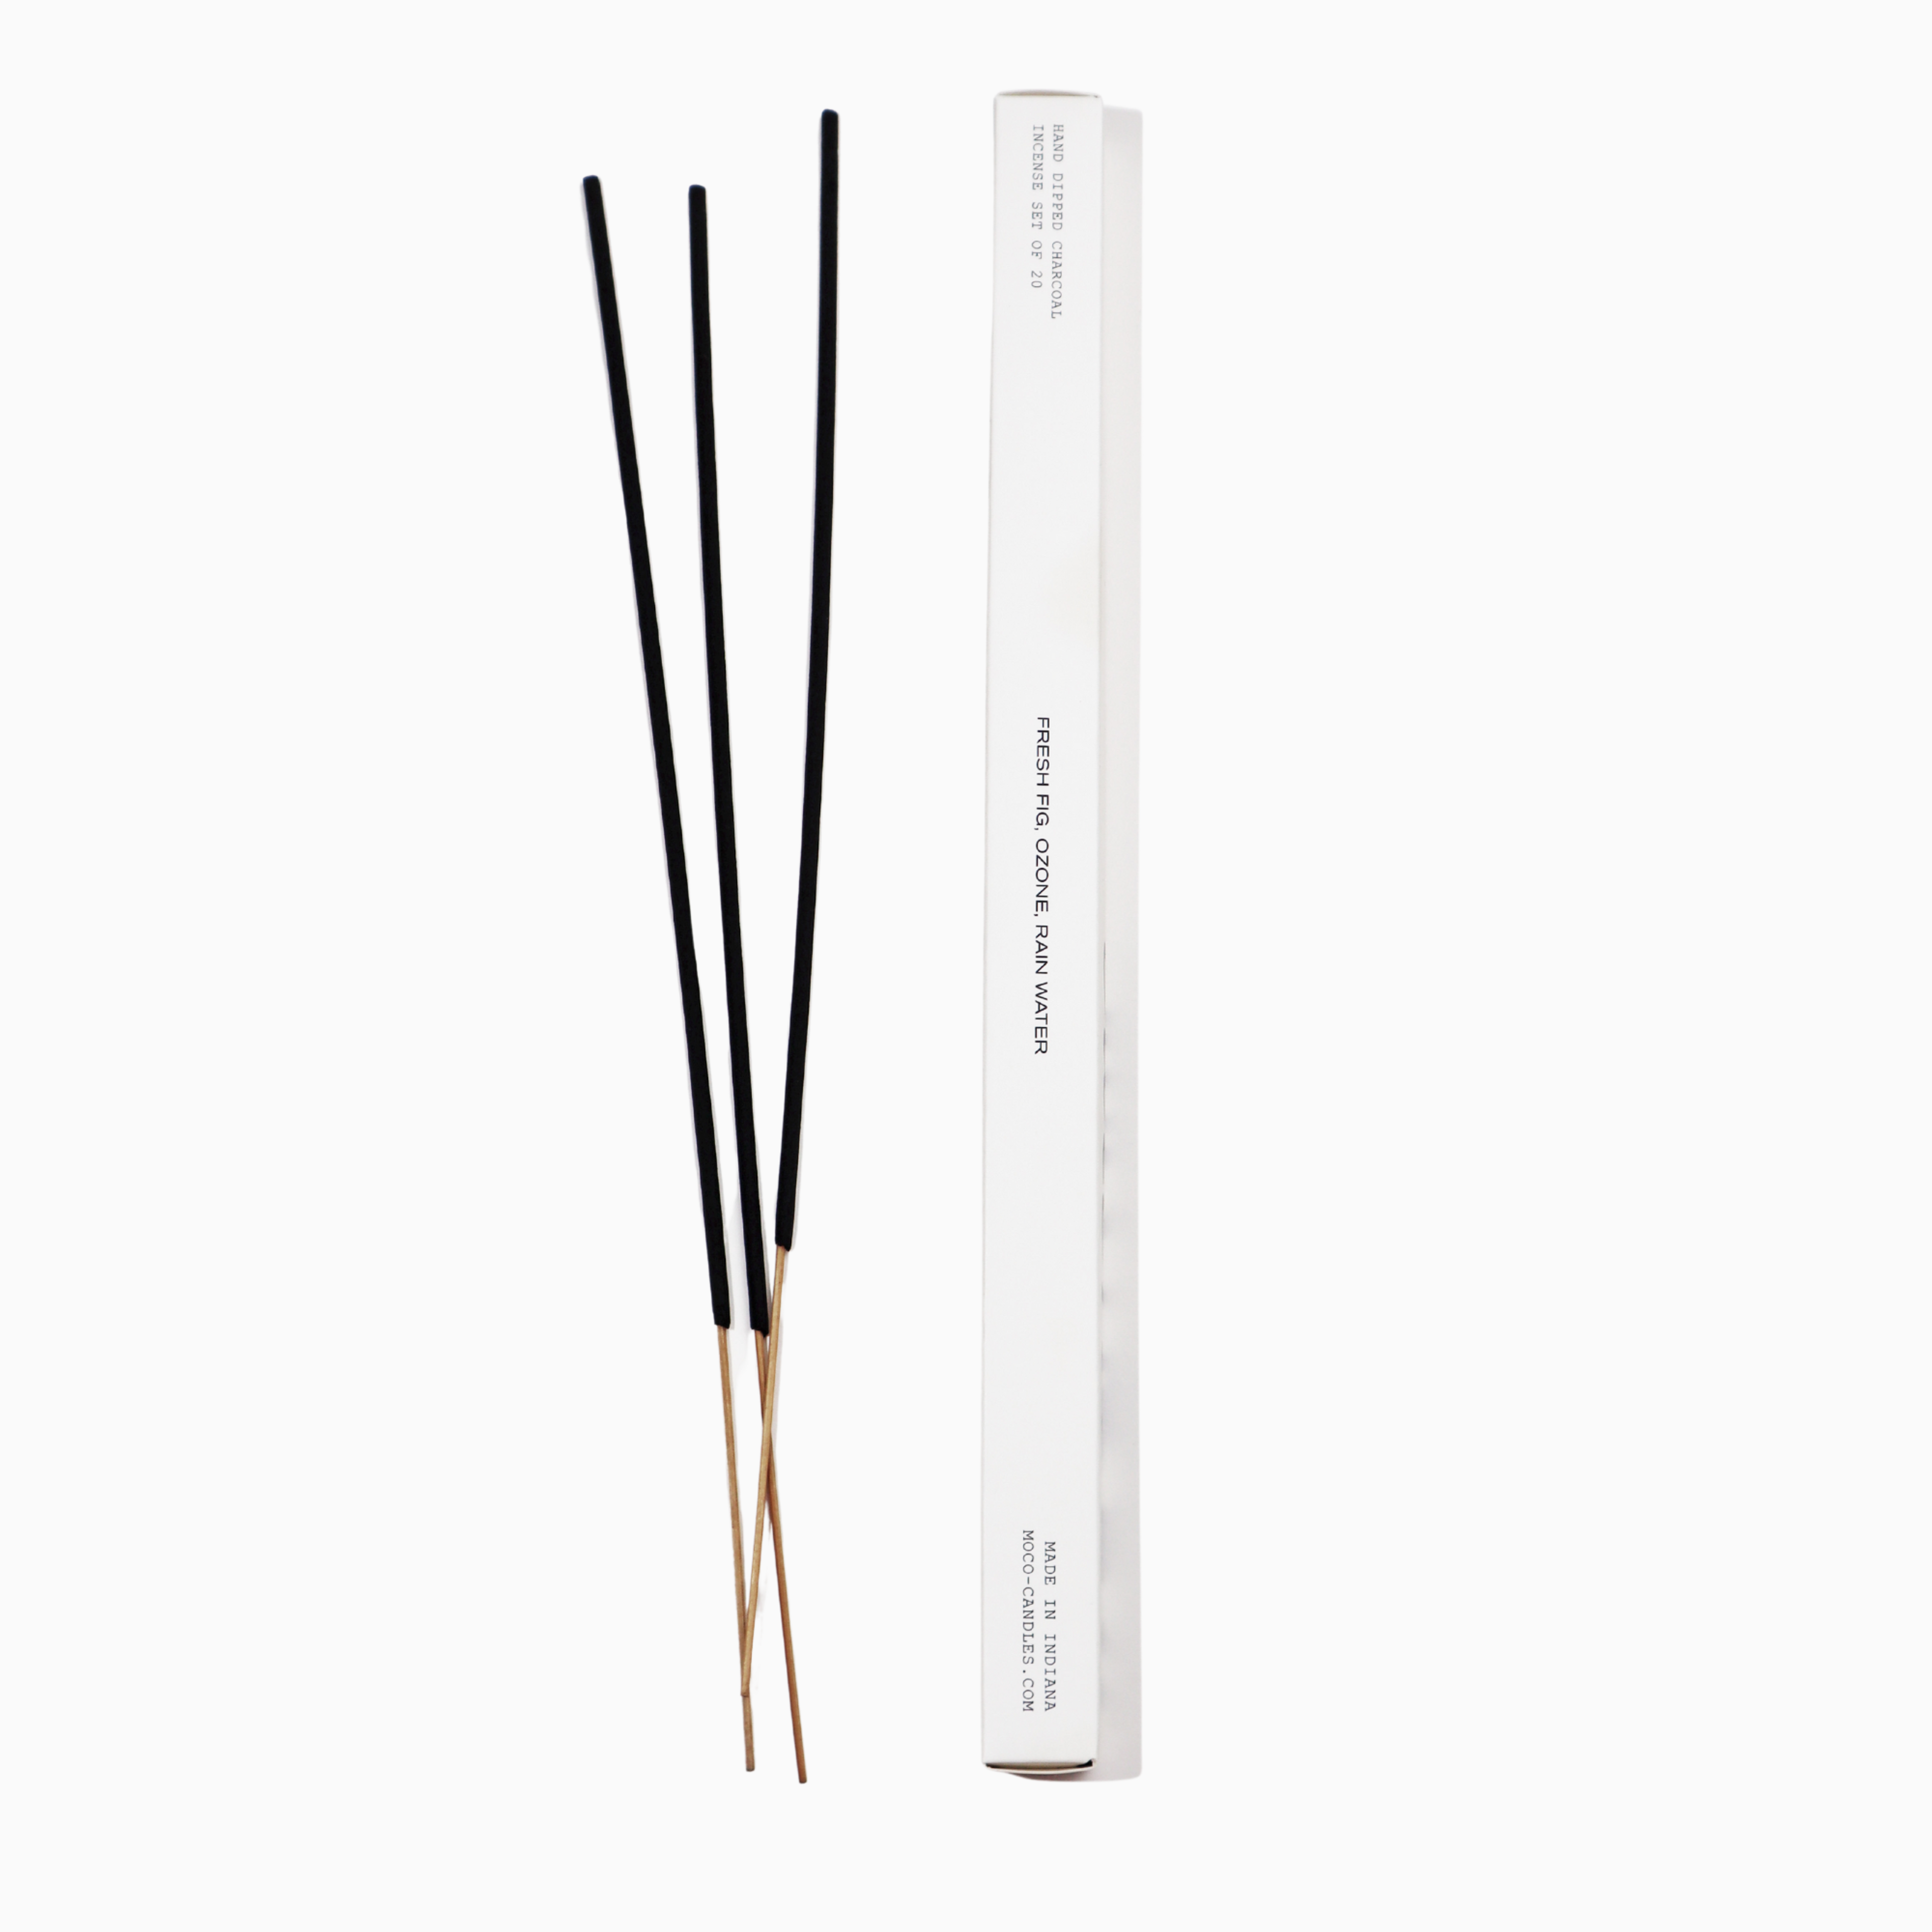 Sweetgrass - Incense Sticks